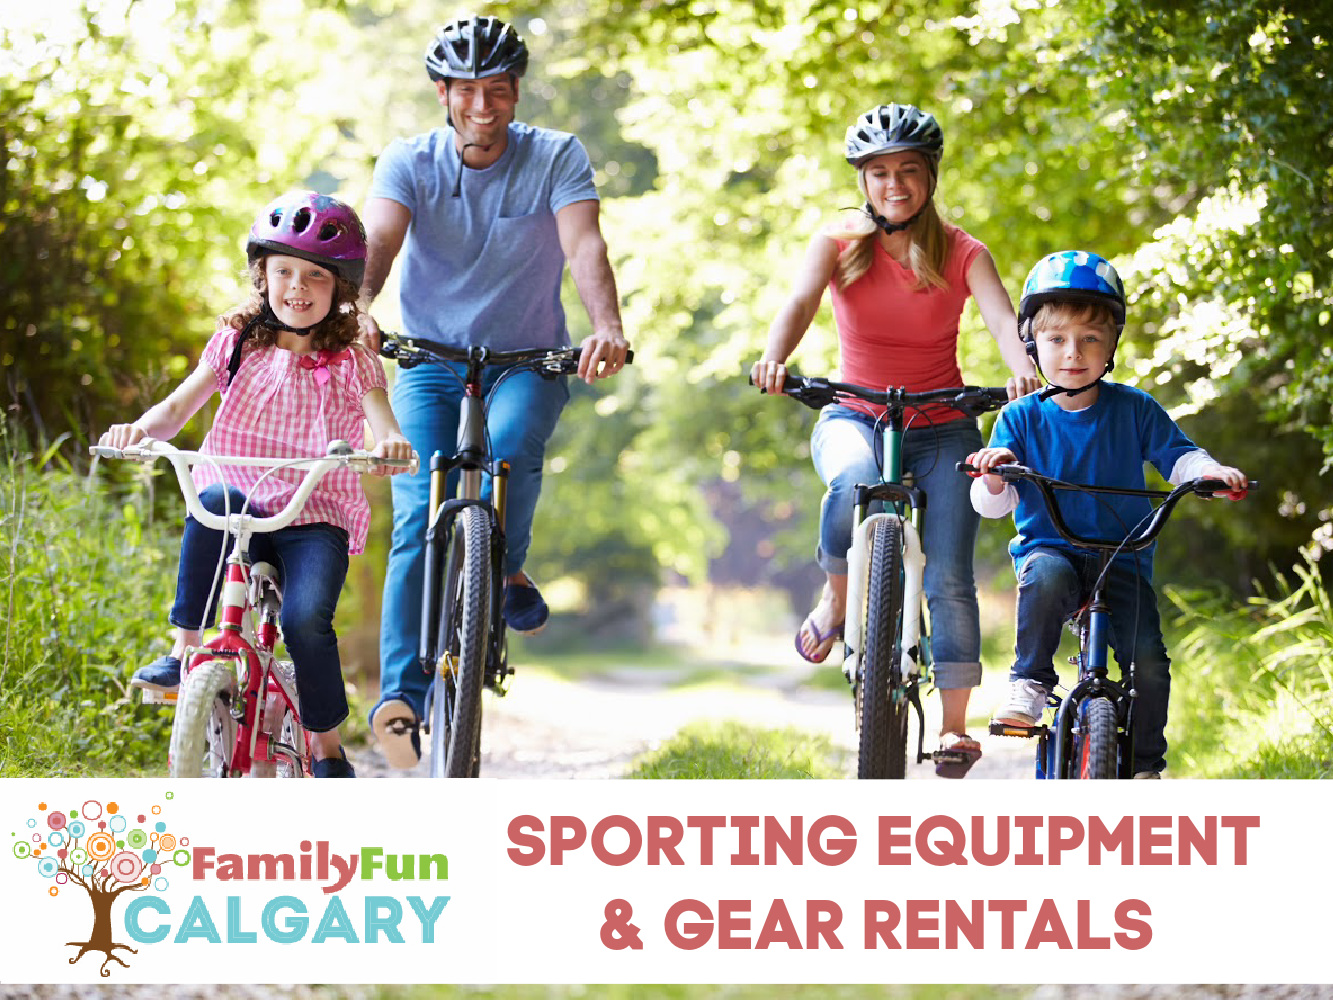 Sporting Equipment & Gear Rentals (Family Fun Calgary)